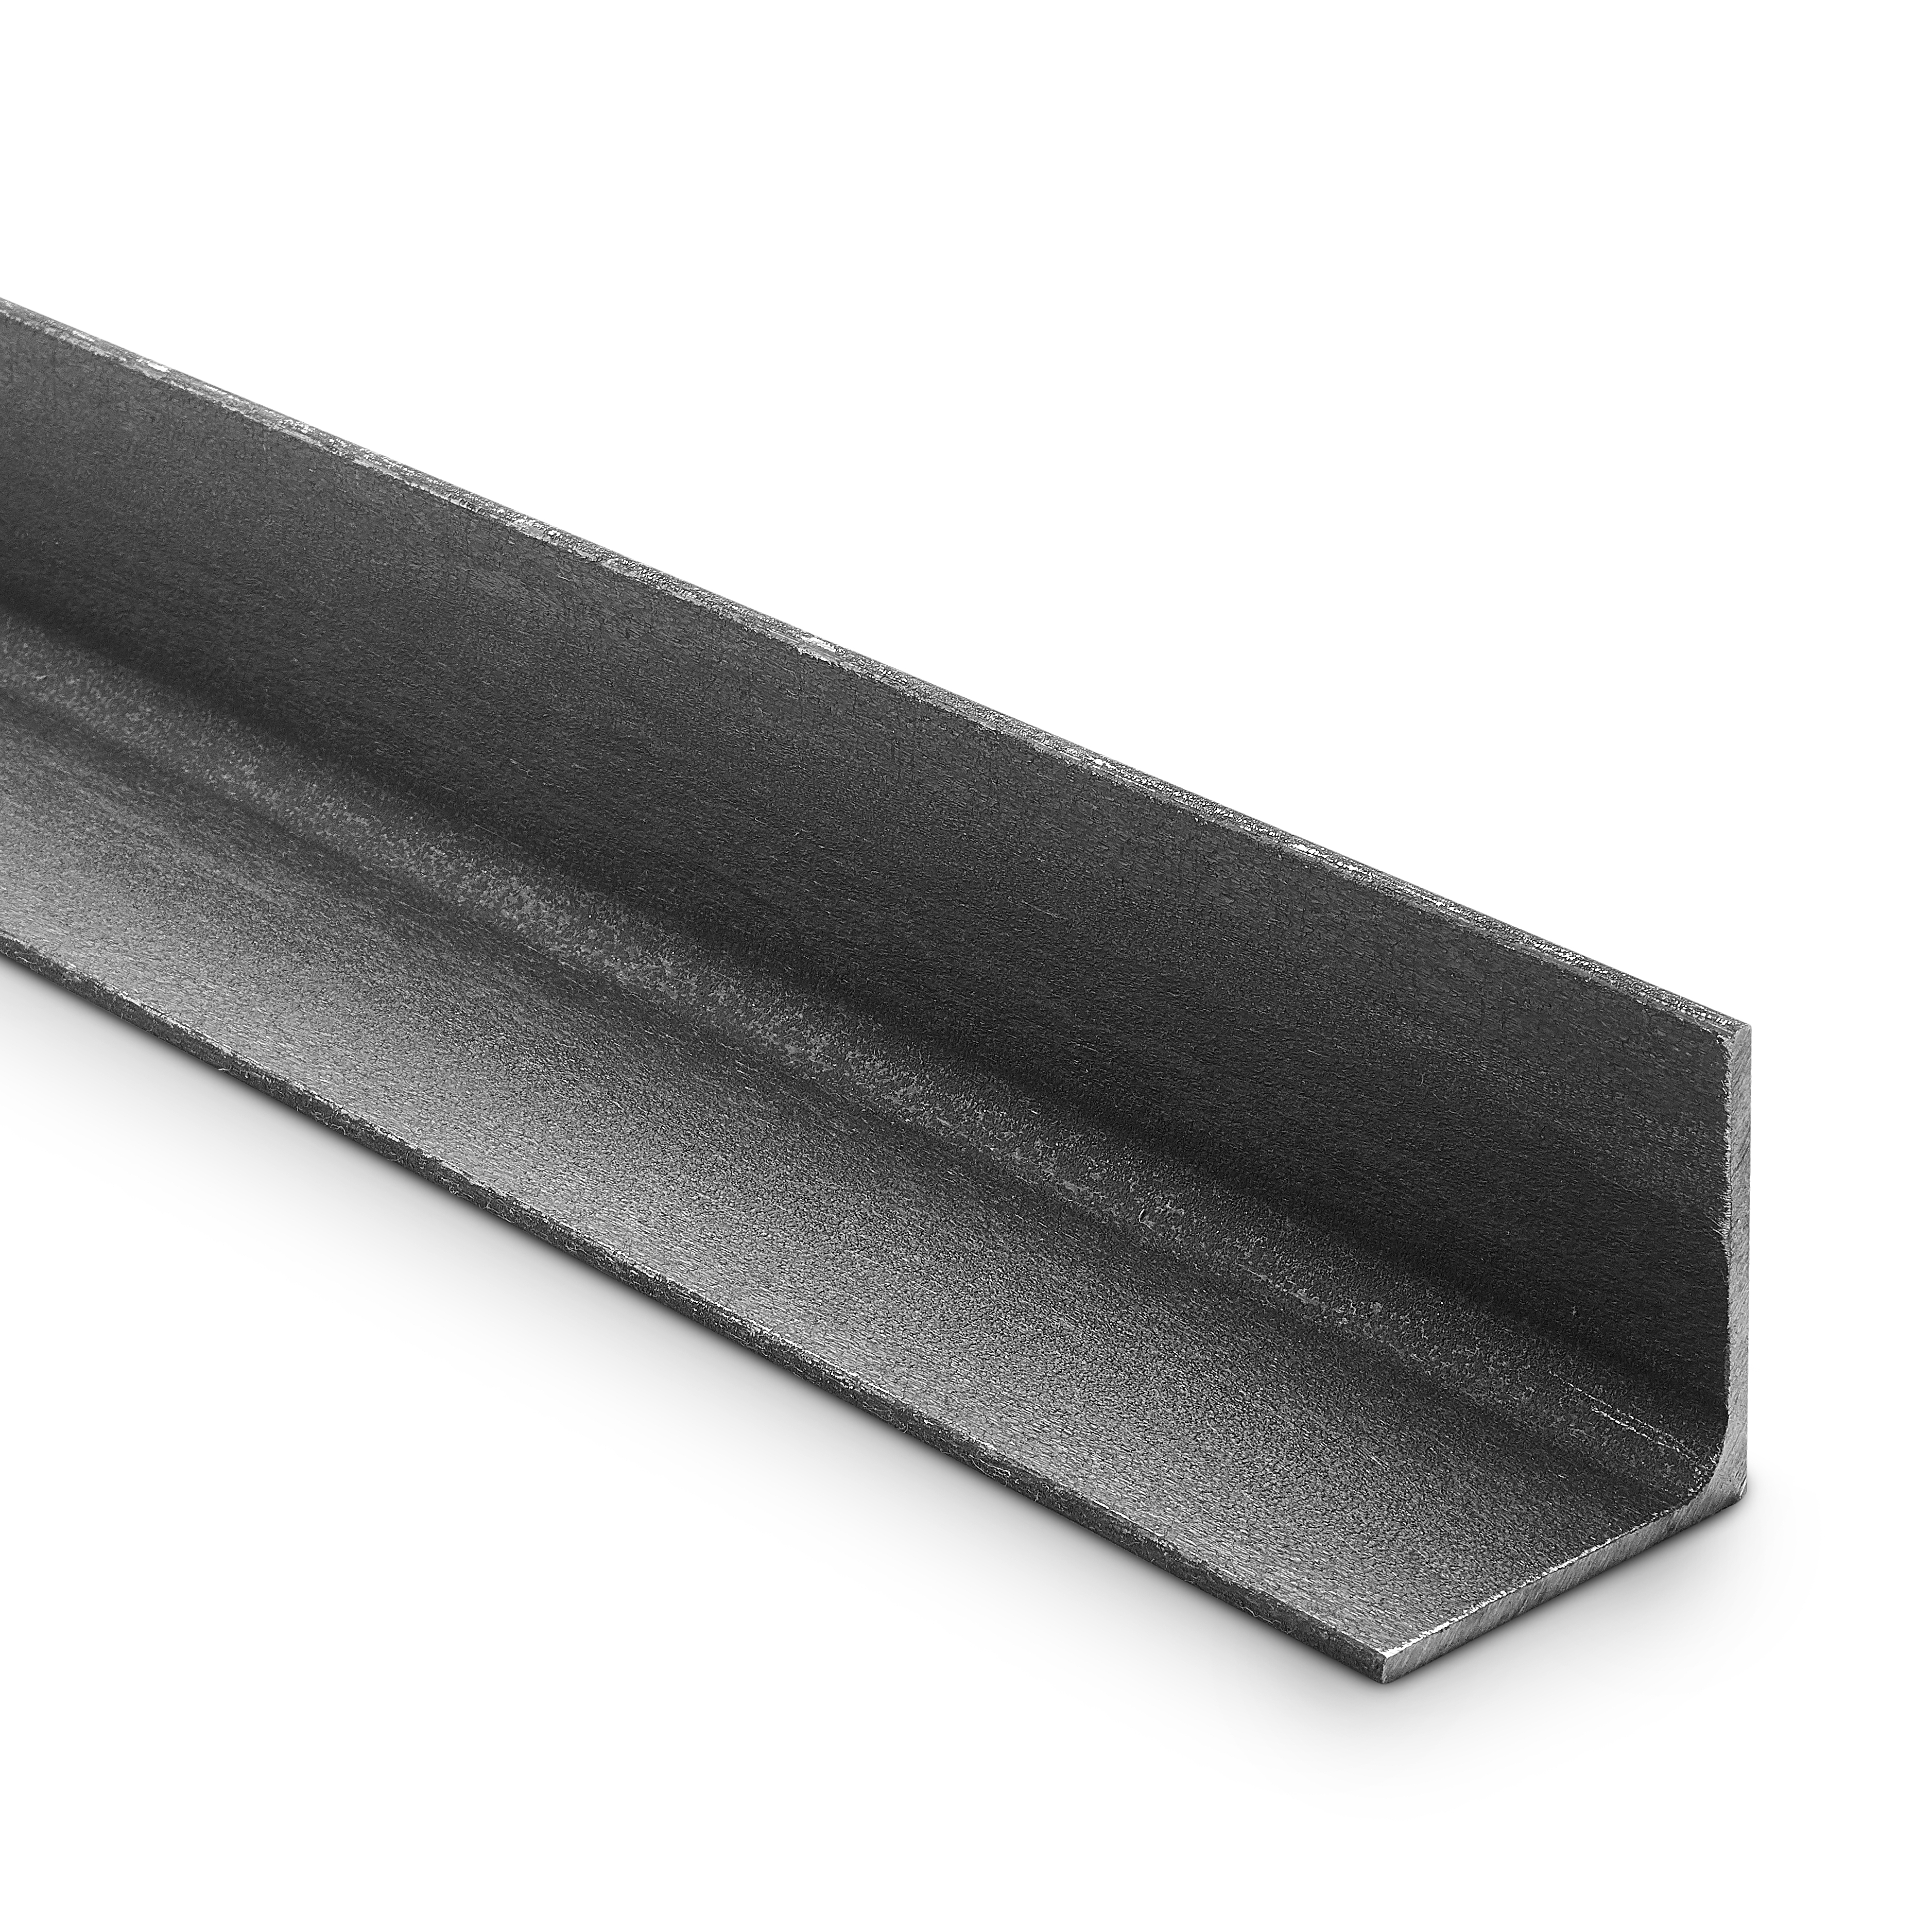 Mild Steel Angle 30mm x 30mm x 3mm Angle Iron 1000mm long 